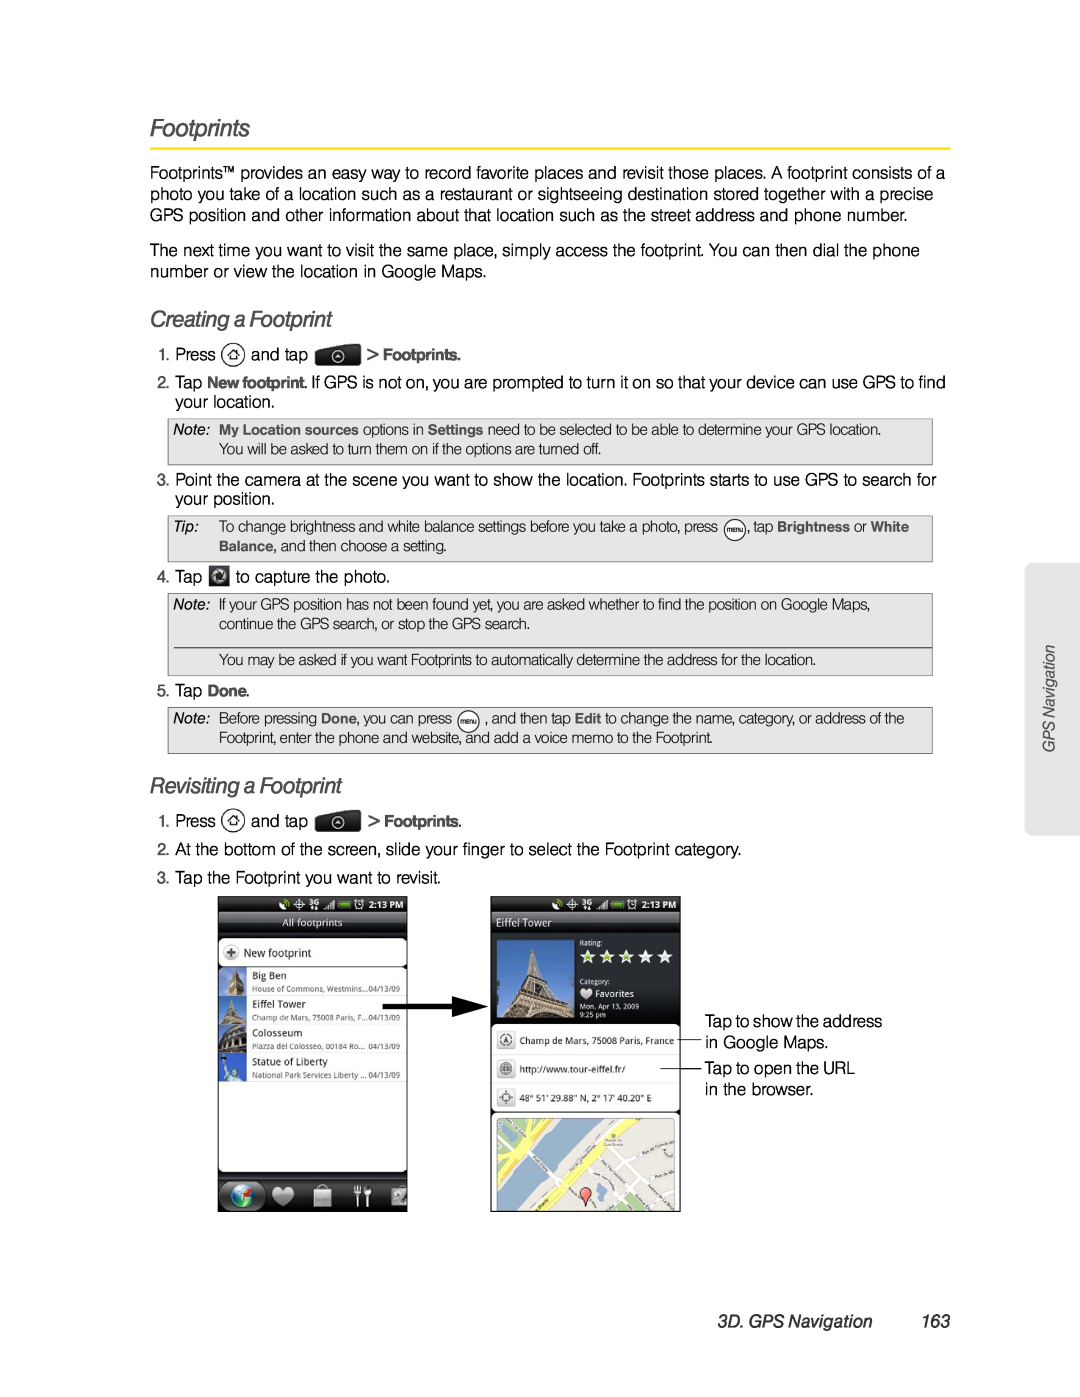 HTC HTC EVO 4G, PC36100 manual Footprints, Creating a Footprint, Revisiting a Footprint, 3D. GPS Navigation 